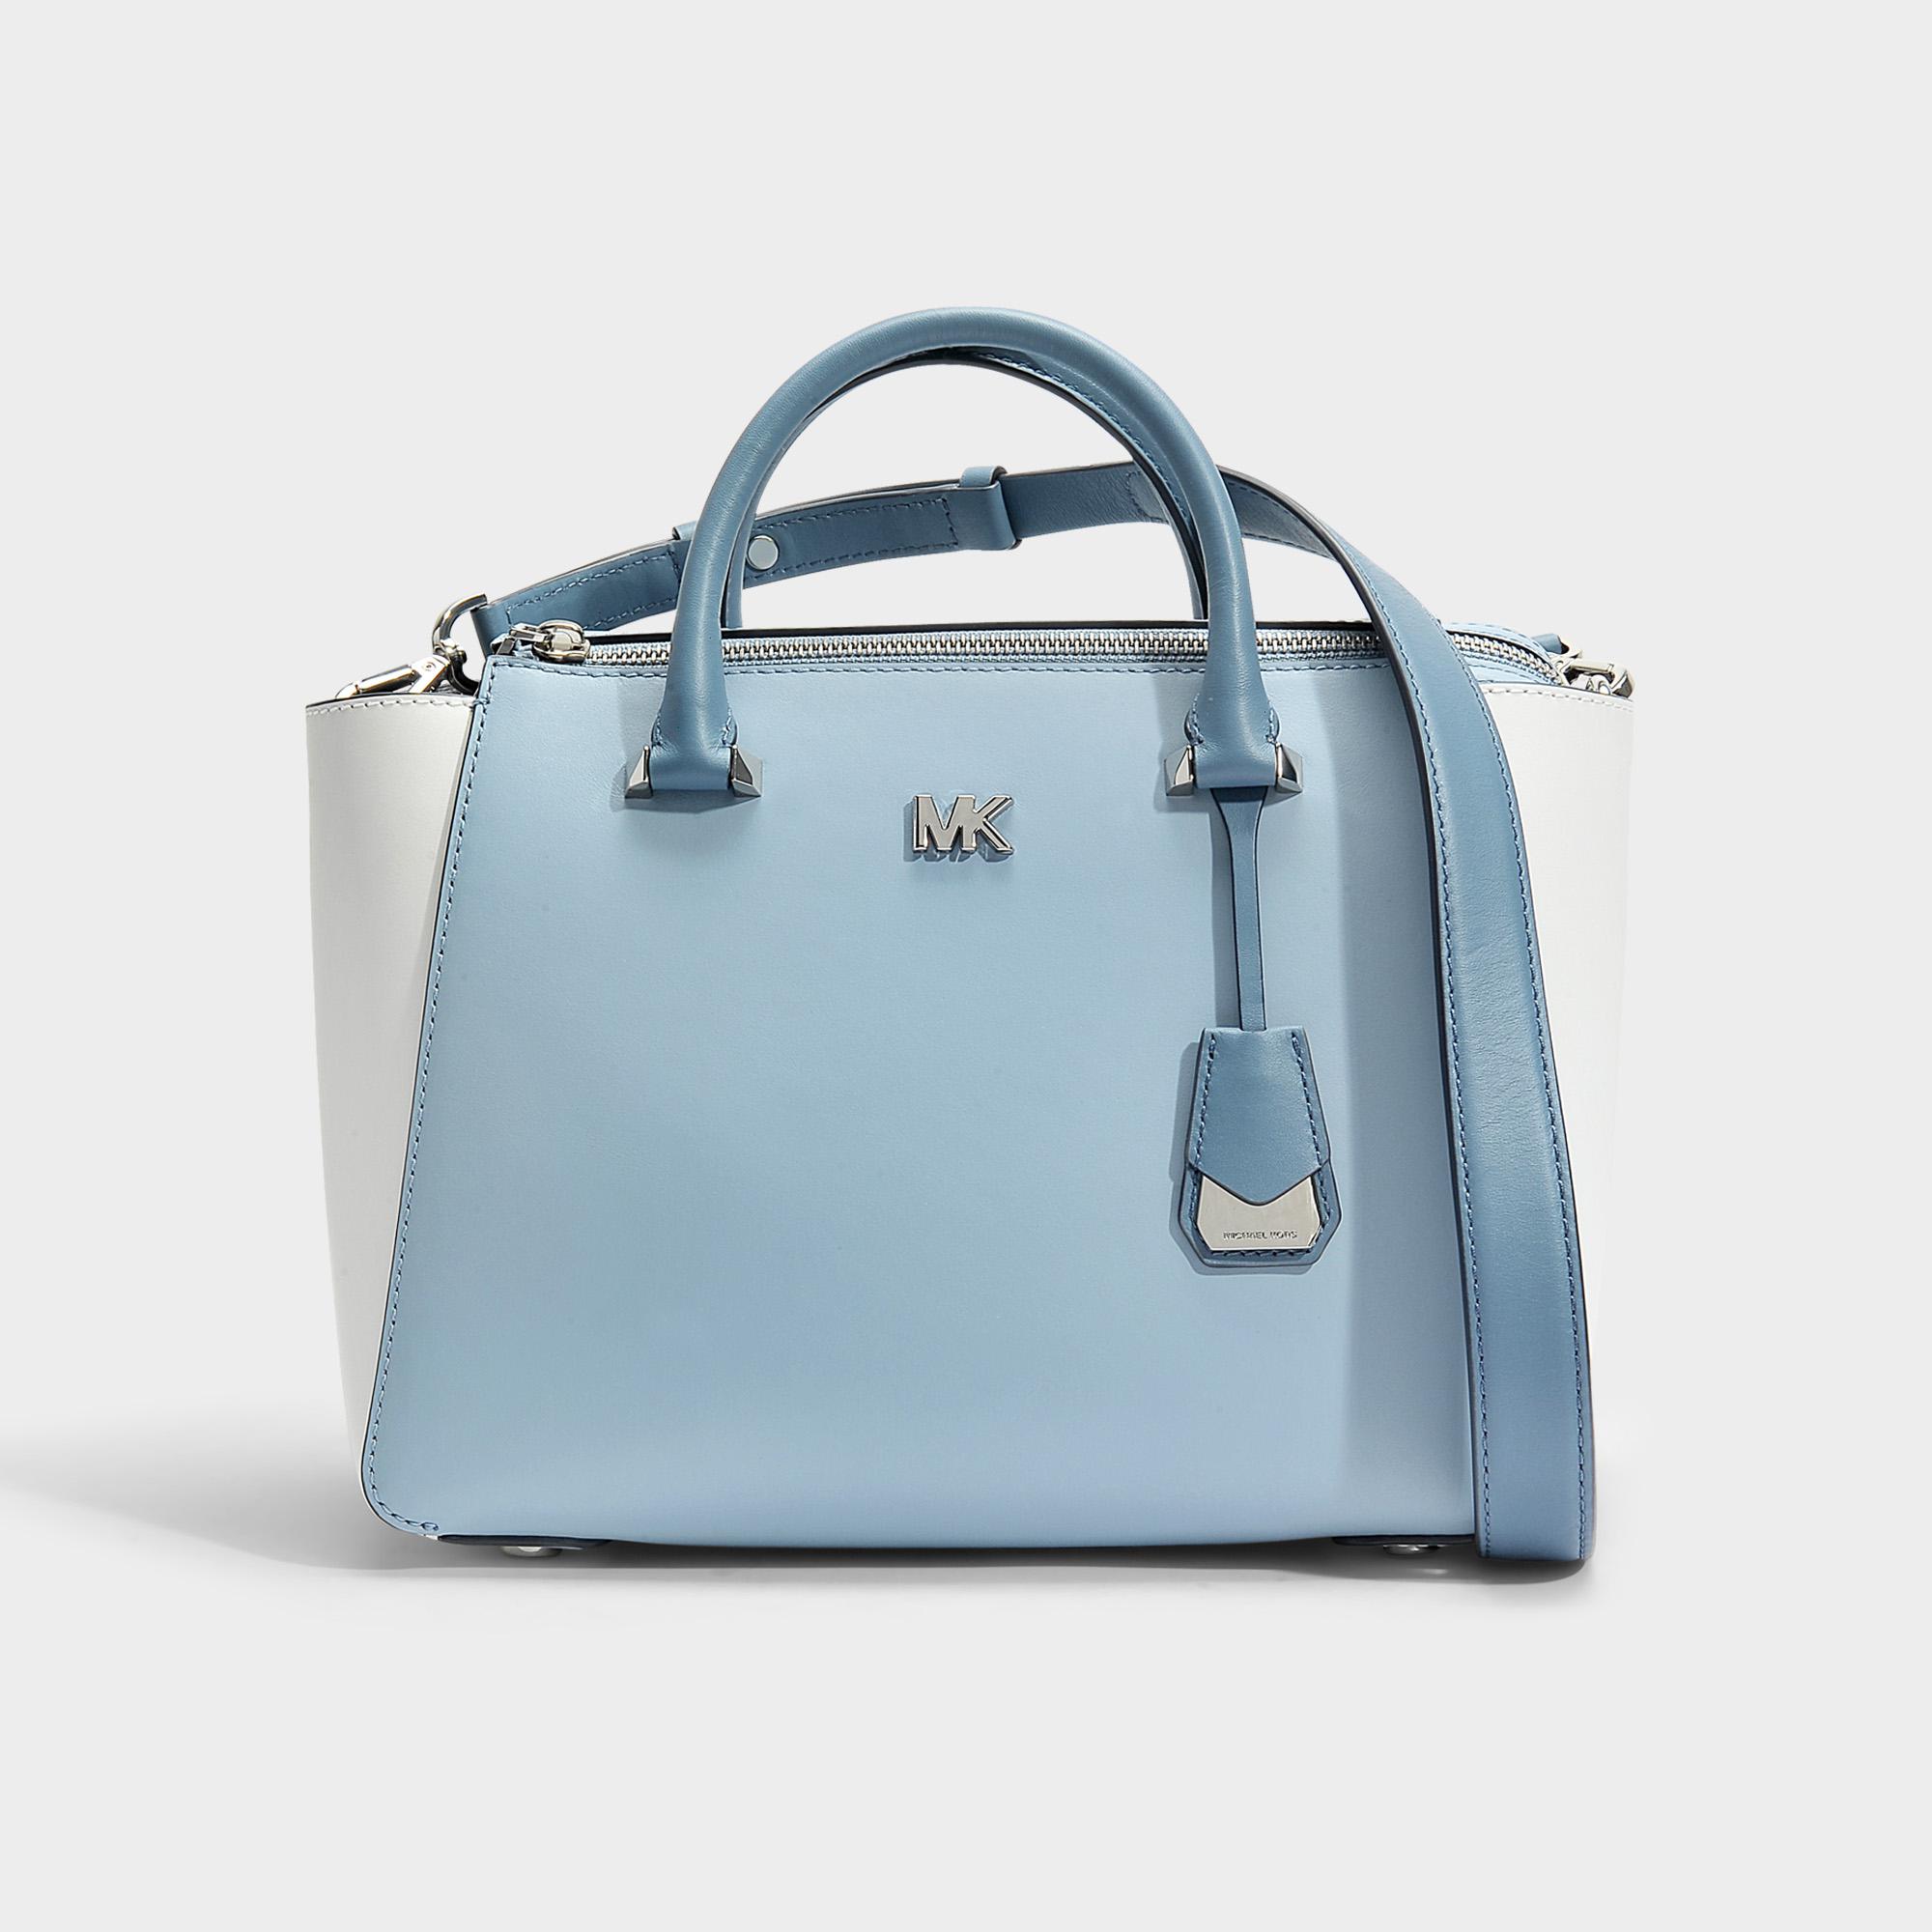 michael kors blue and white purse